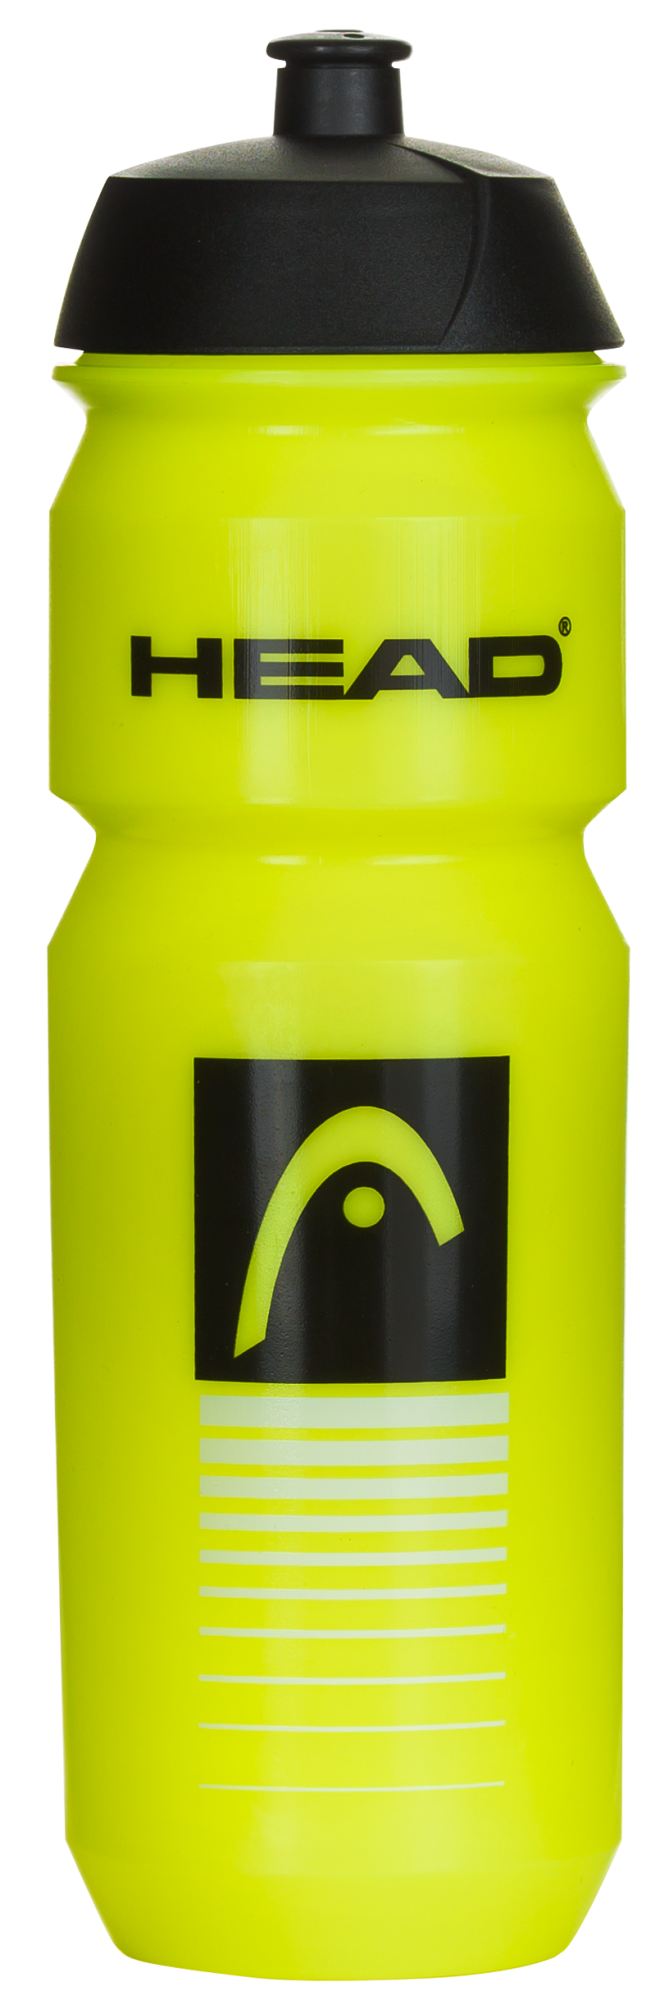 Cycling bottle